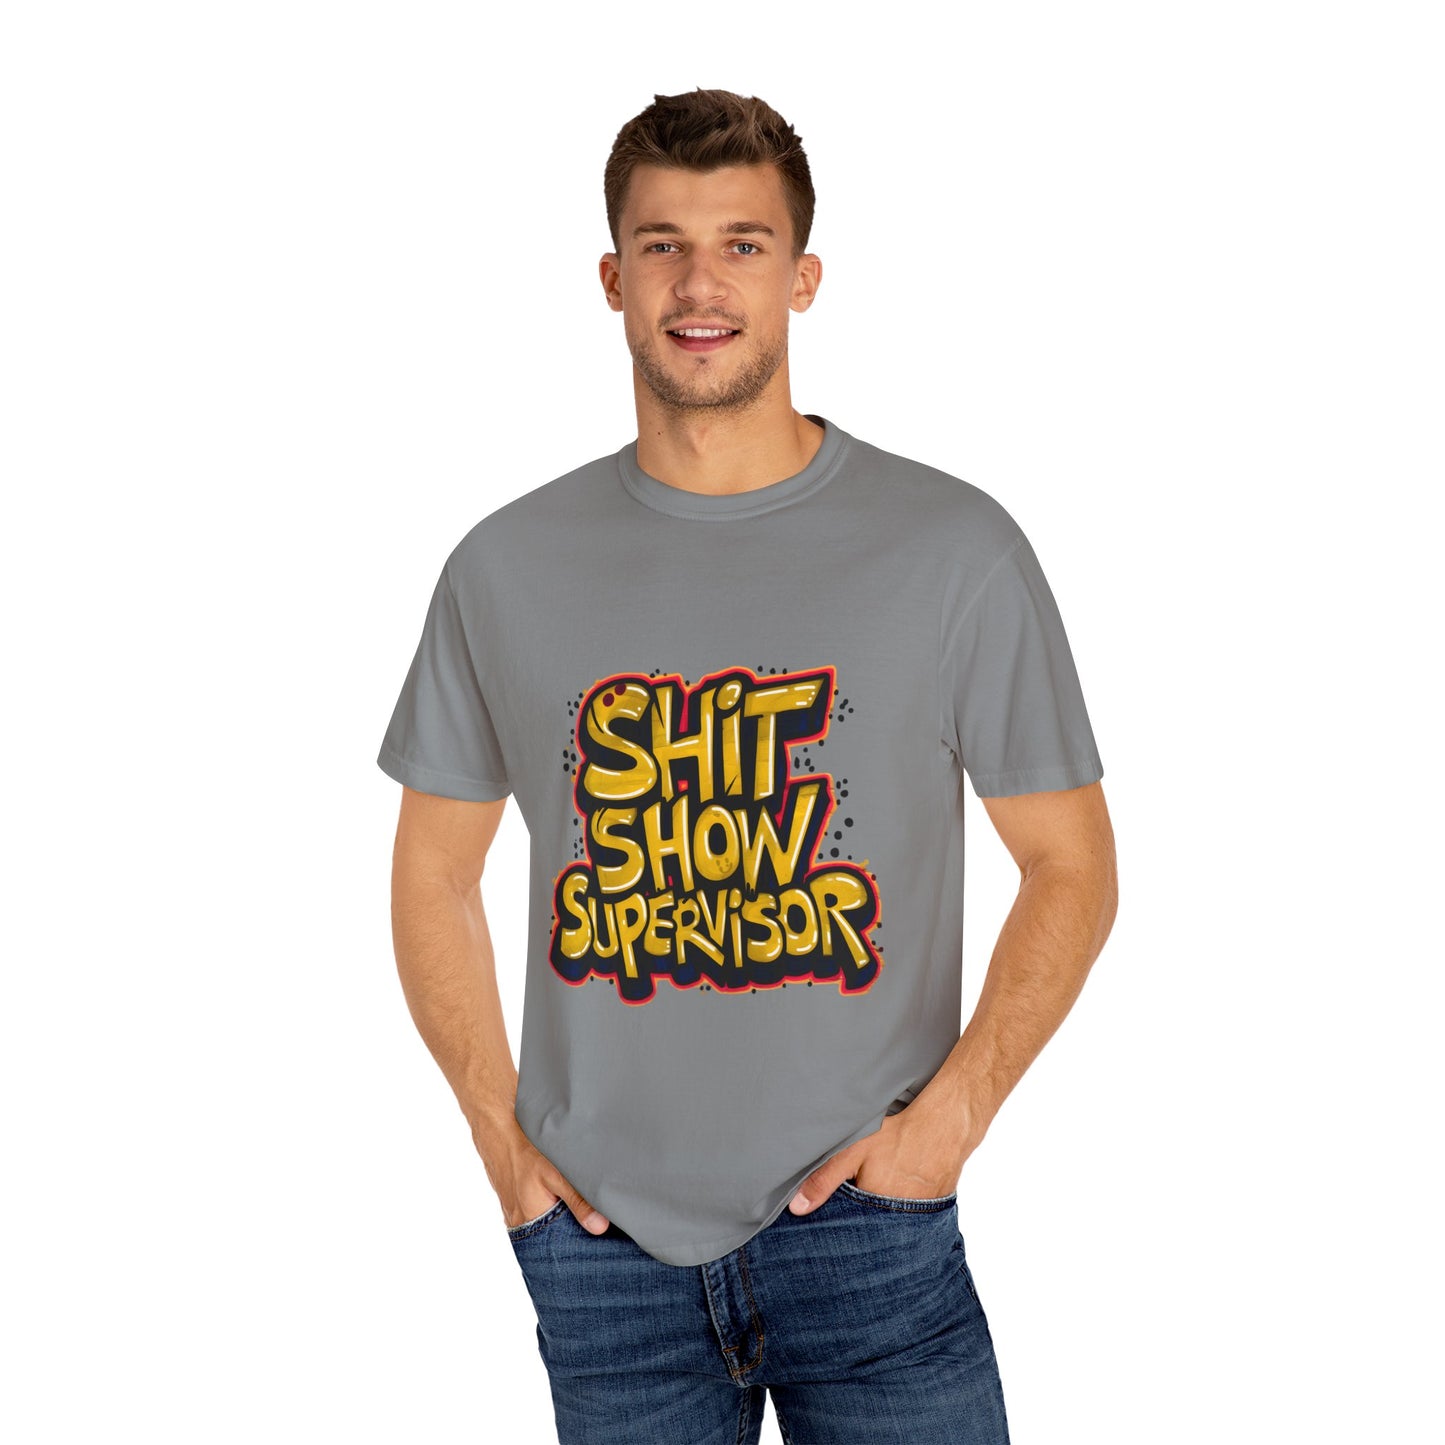 Shit Show Supervisor Urban Sarcastic Graphic Unisex Garment Dyed T-shirt Cotton Funny Humorous Graphic Soft Premium Unisex Men Women Granite T-shirt Birthday Gift-27